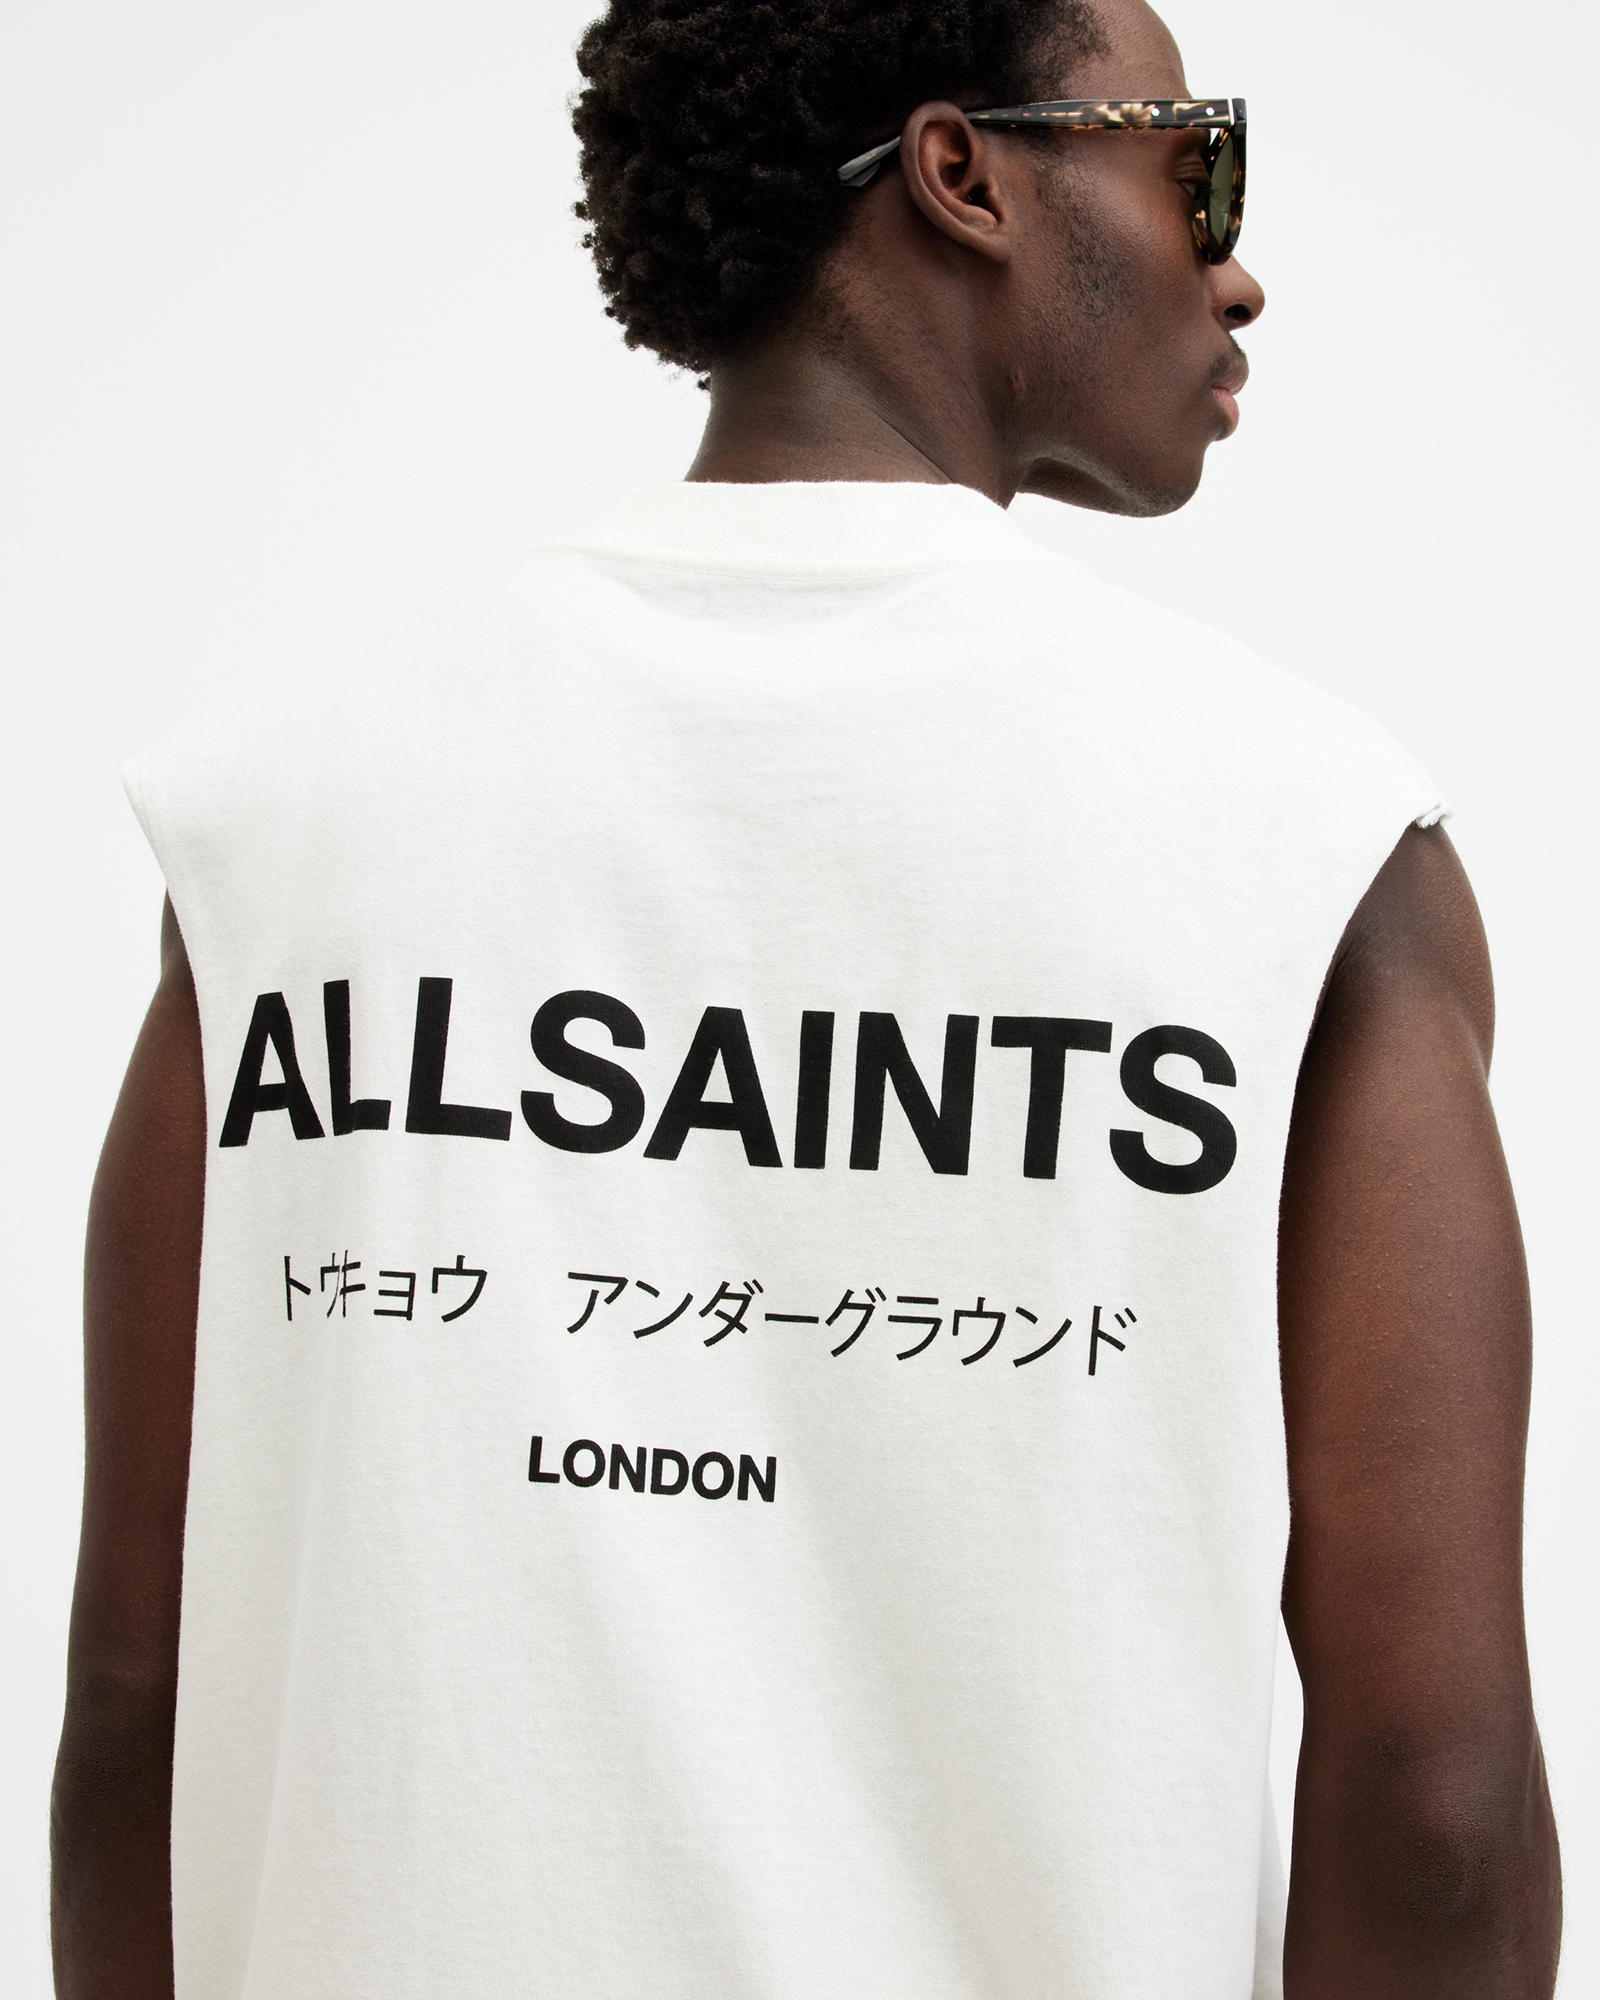 AllSaints Underground Logo Sleeveless Tank Top,, ASHEN WHITE